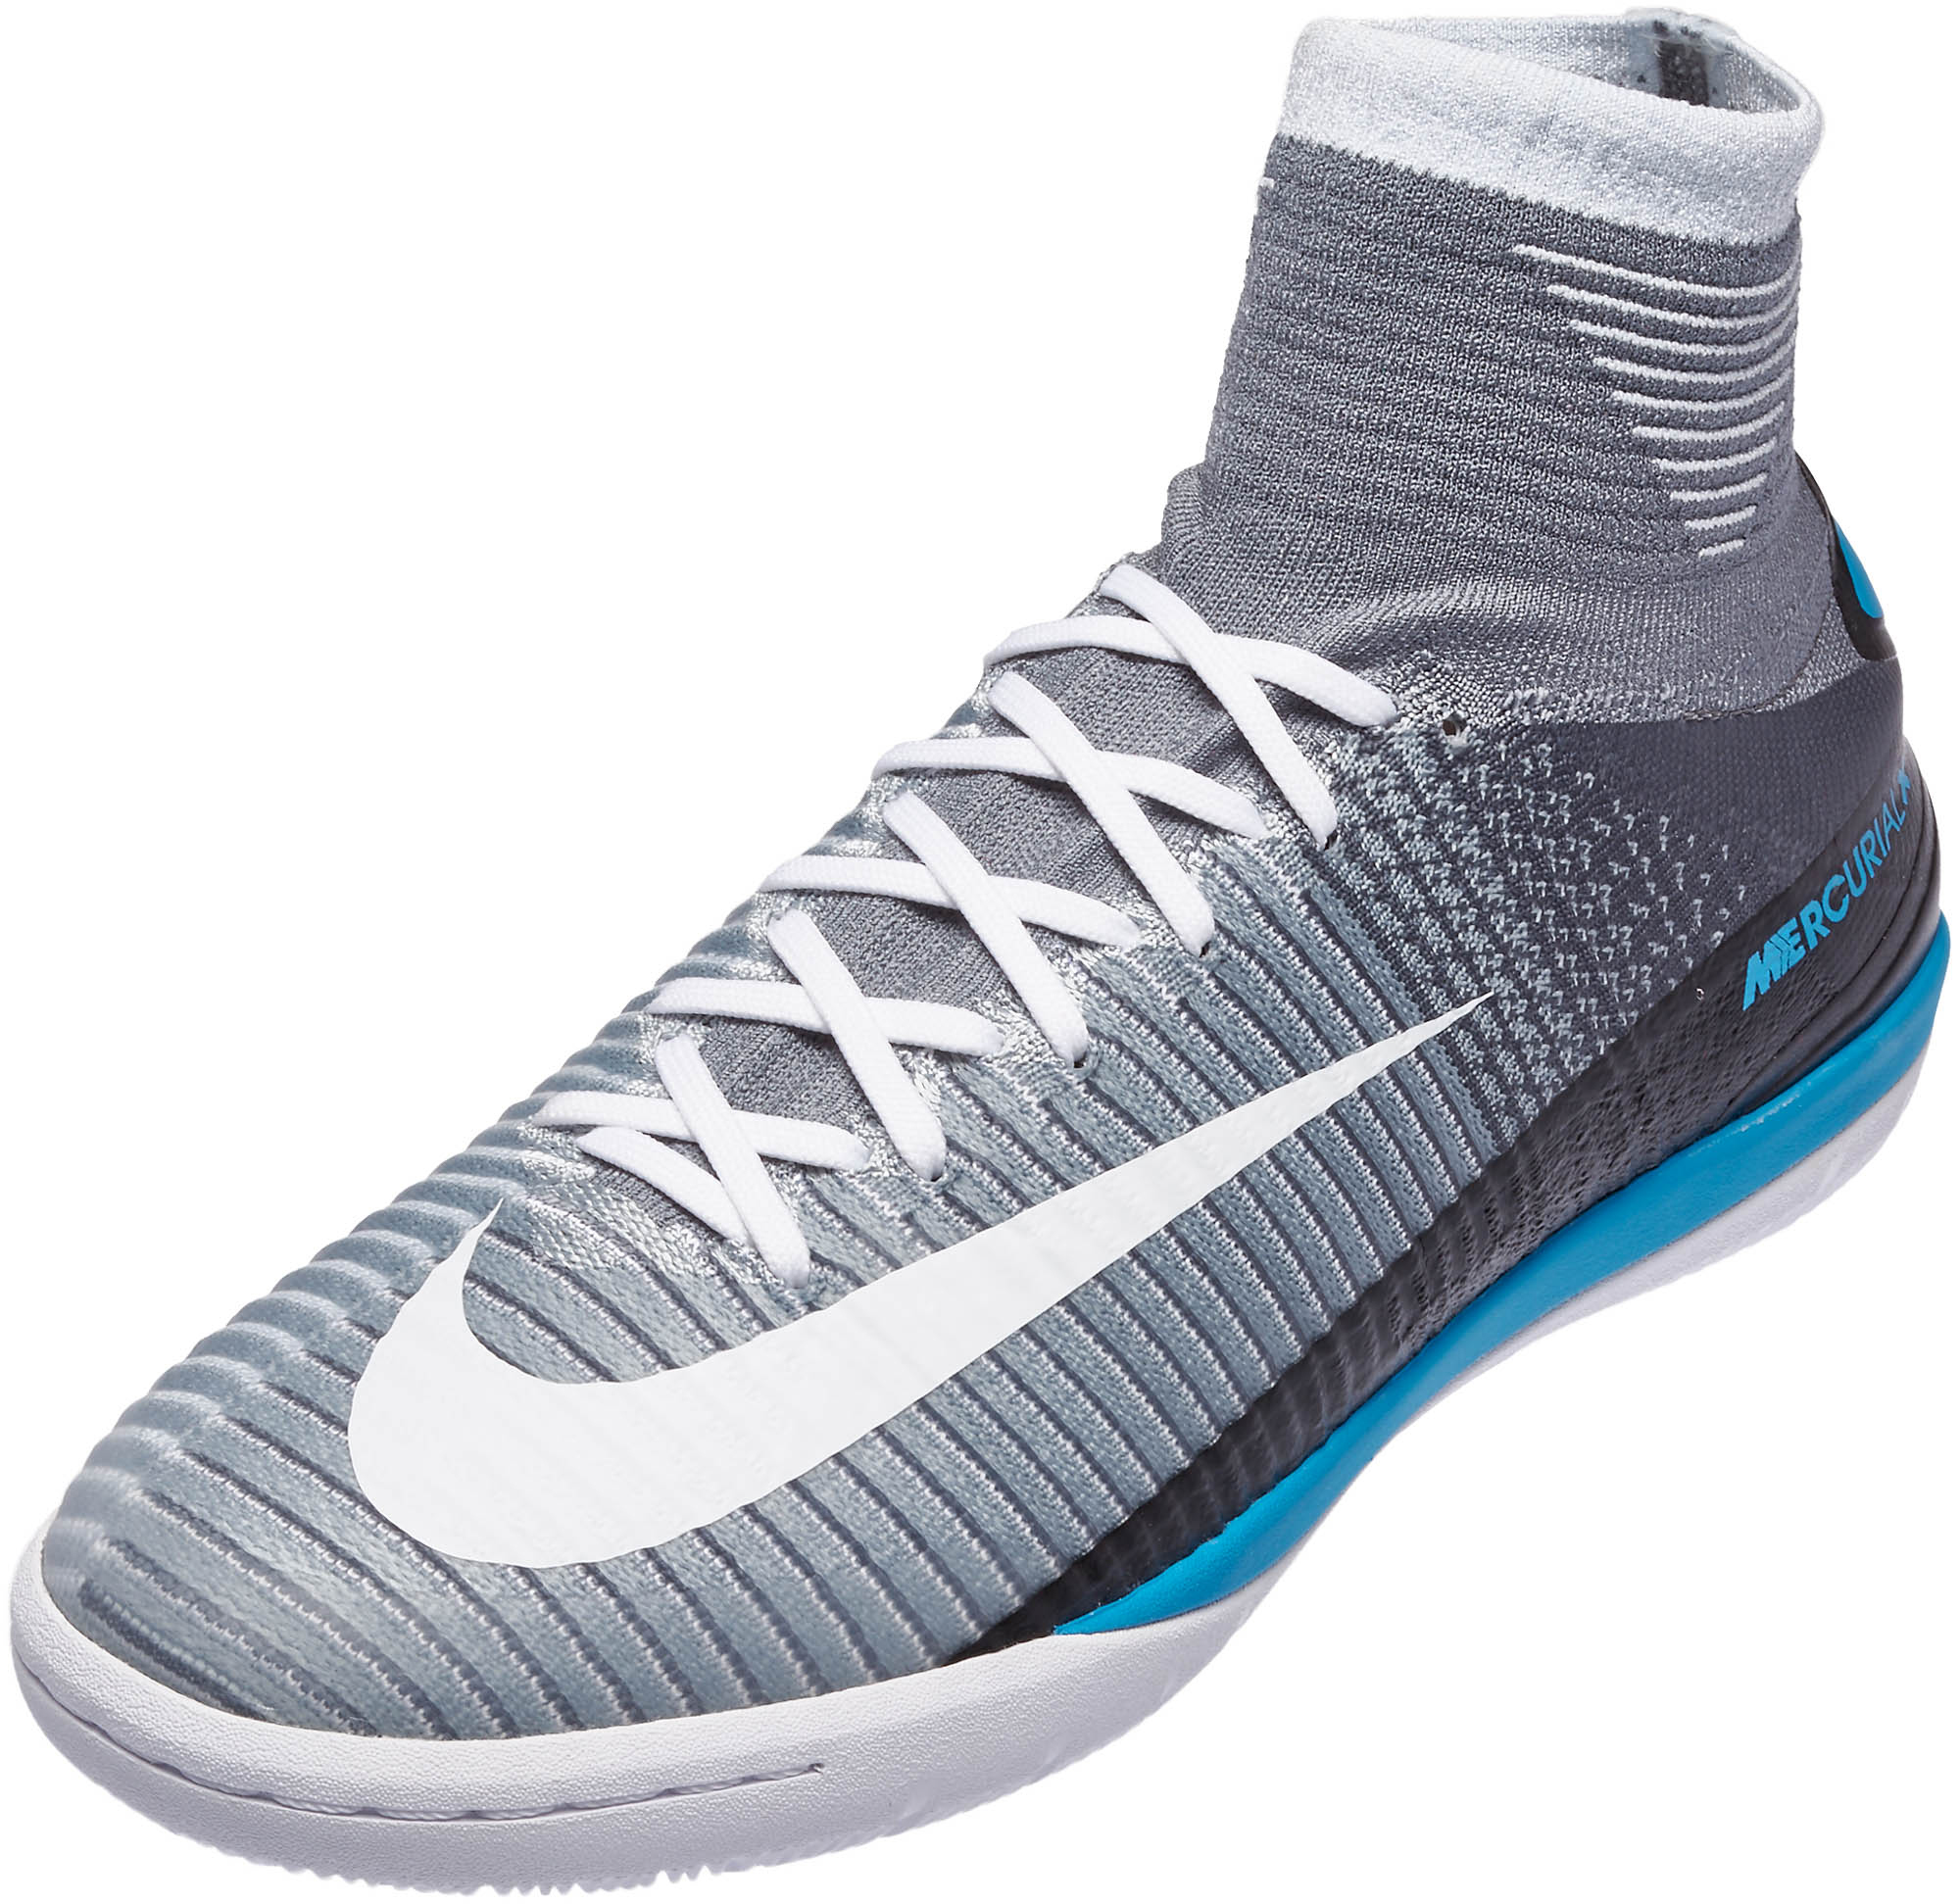 Nike MercurialX Proximo - Grey Indoor Shoes